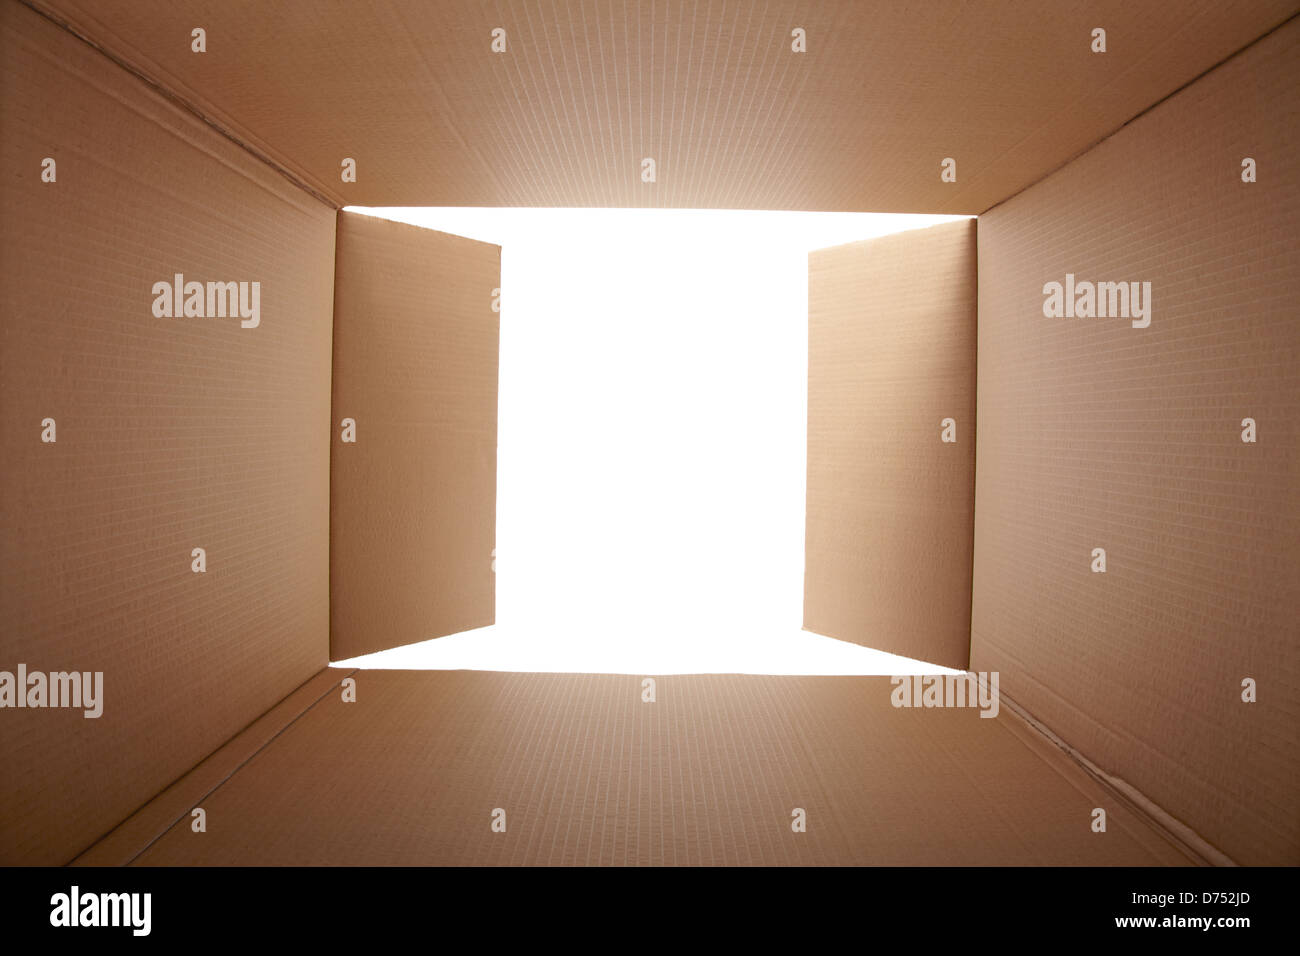 Cardboard box, inside view Stock Photo